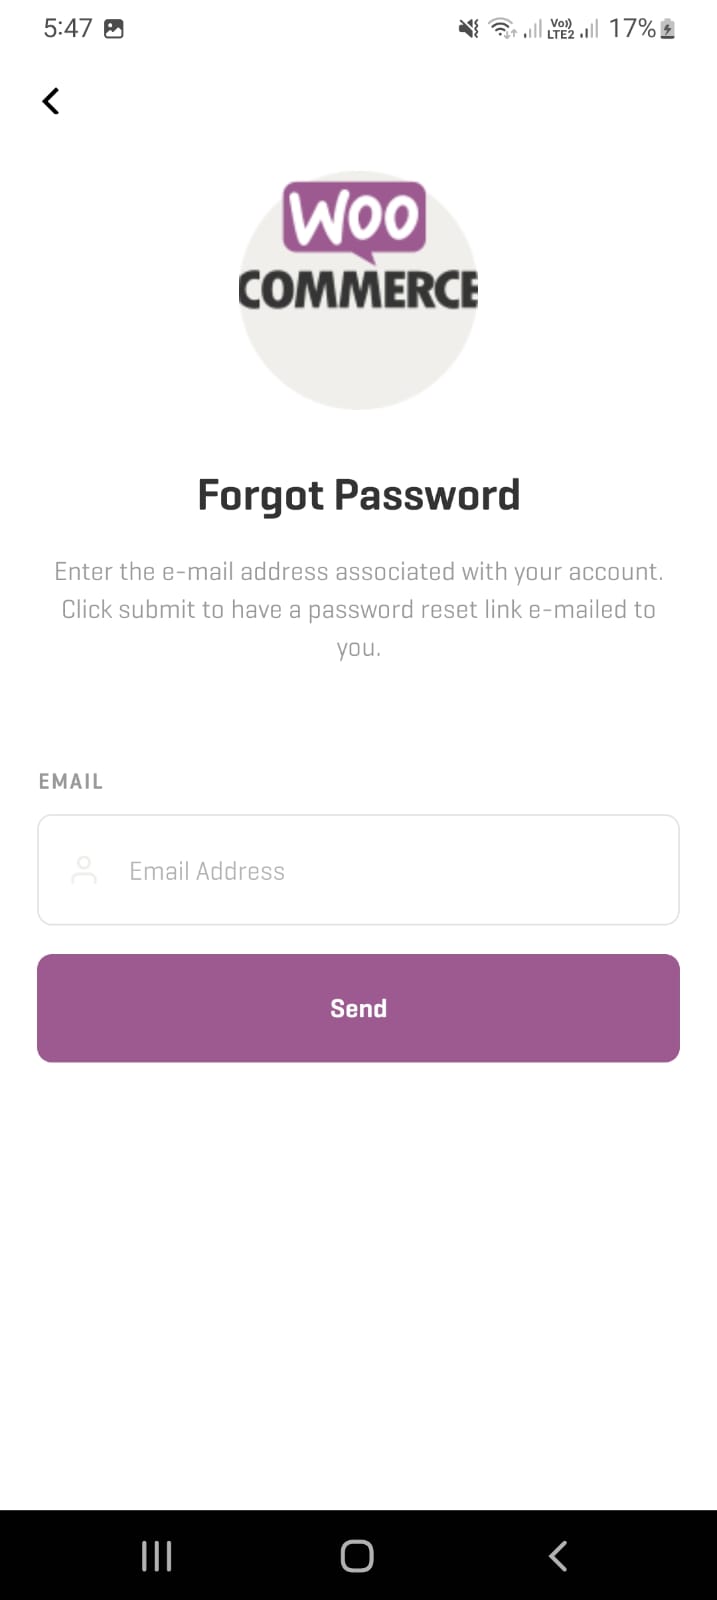 WooCommerce React Native App Forgot Password Screen